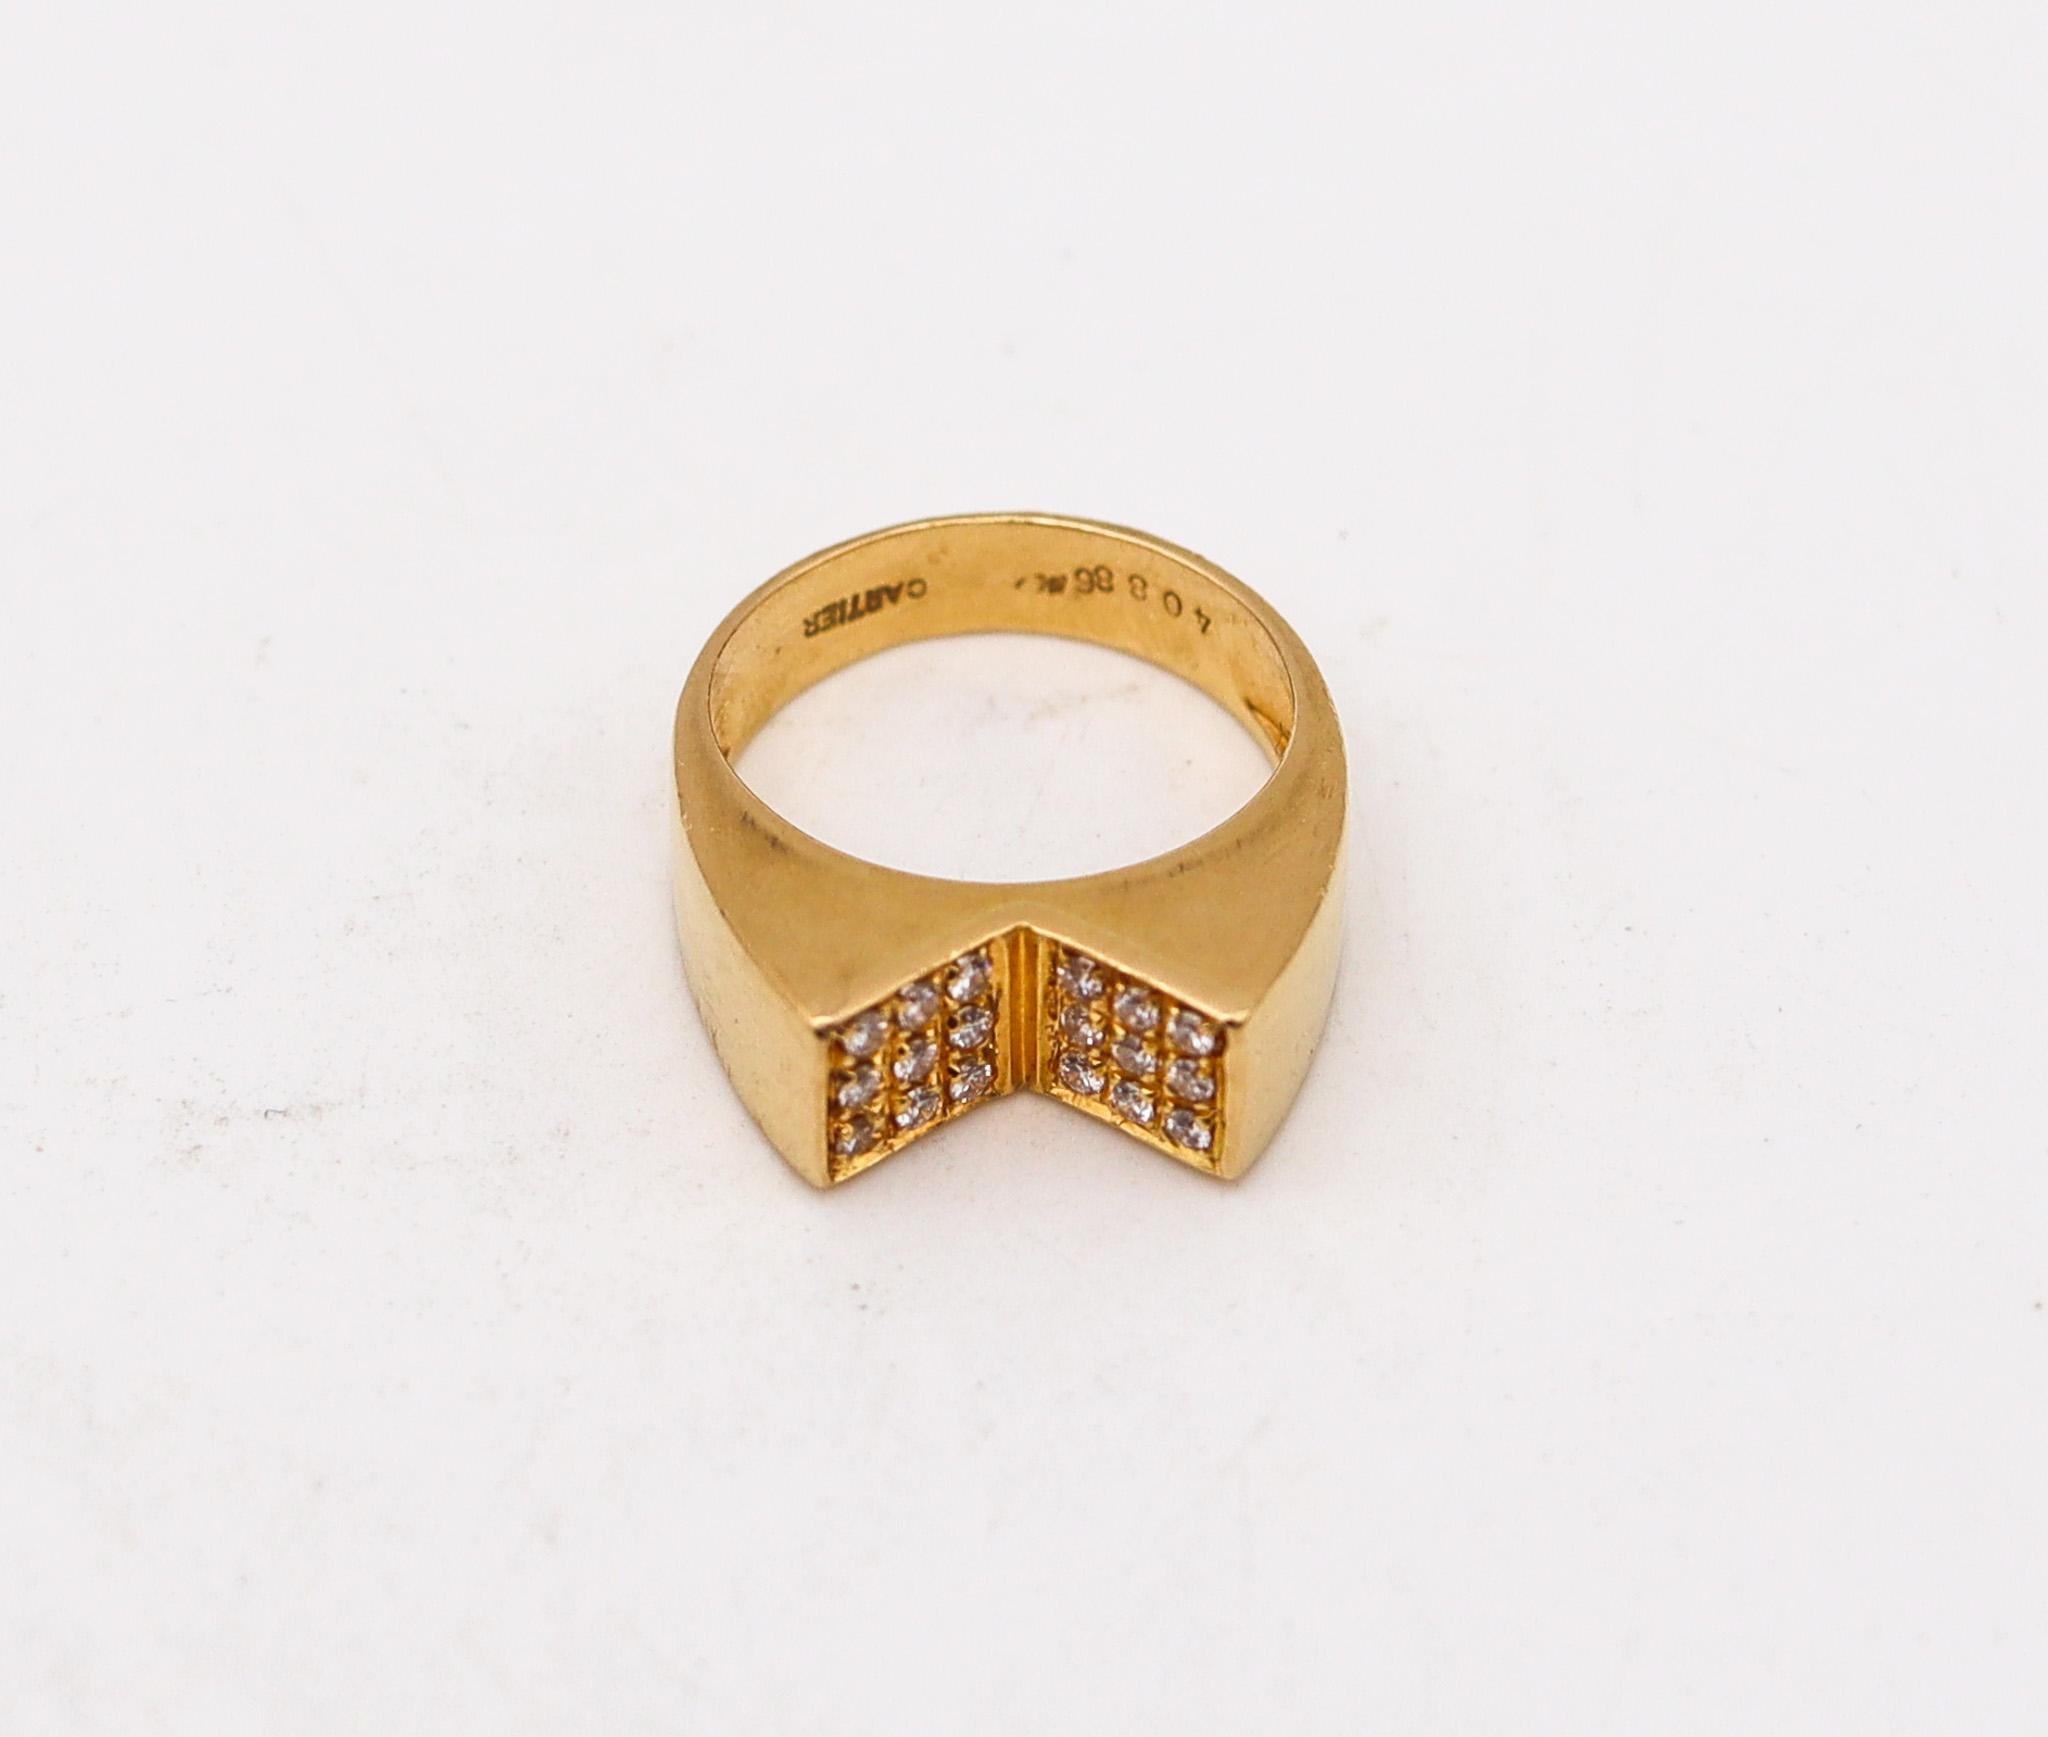 Brilliant Cut Cartier 1970 Geometric Modernist Ring in 18 Karat Yellow Gold with Diamonds